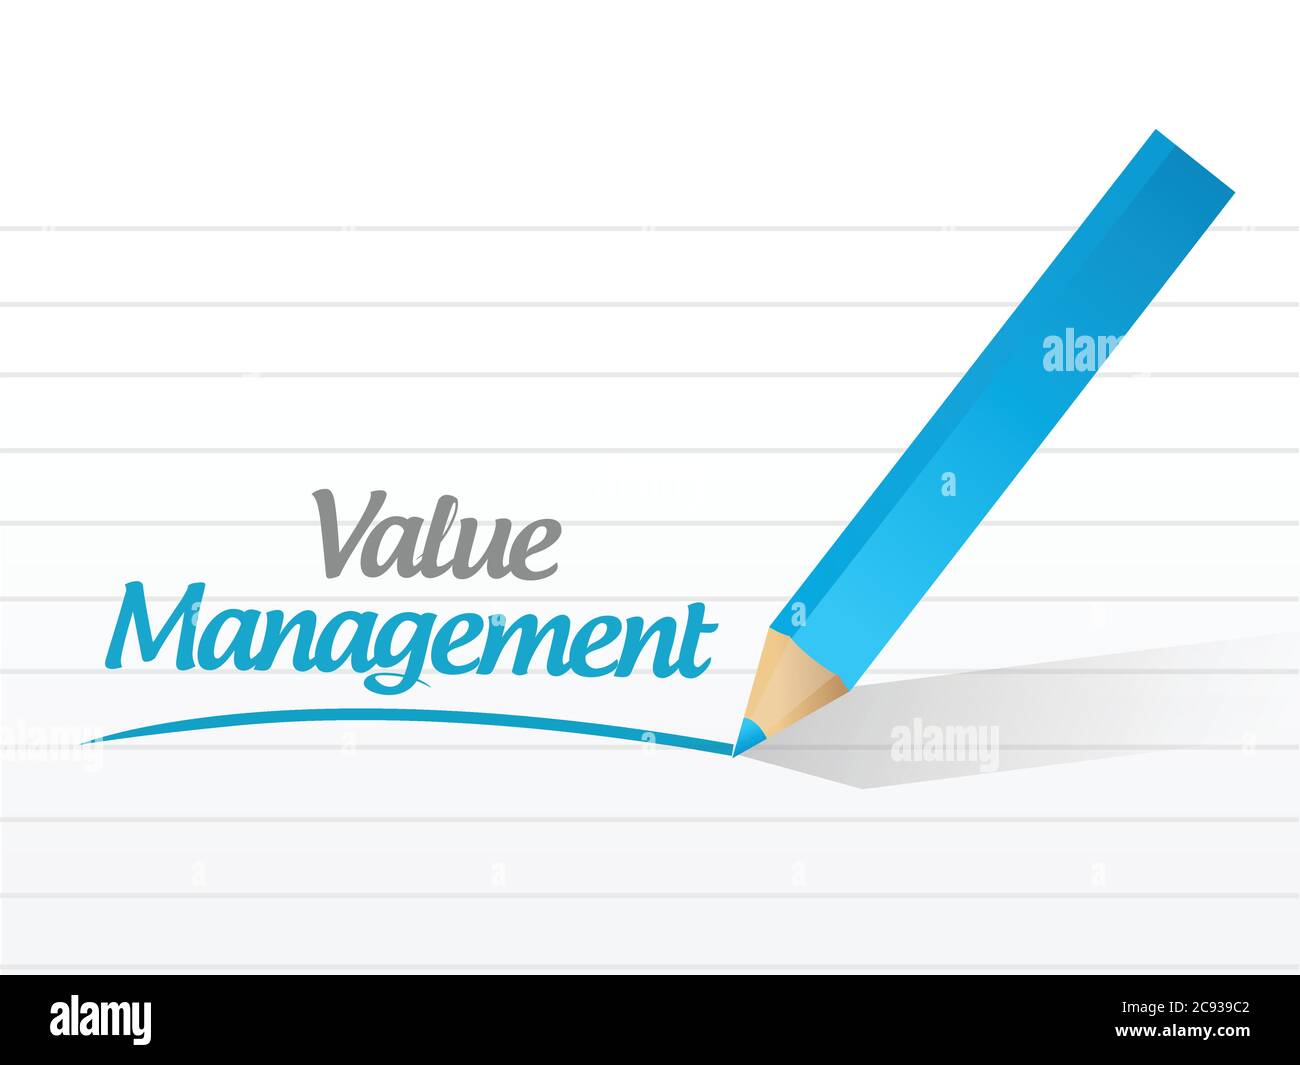 Value management message illustration design over a white background Stock Vector